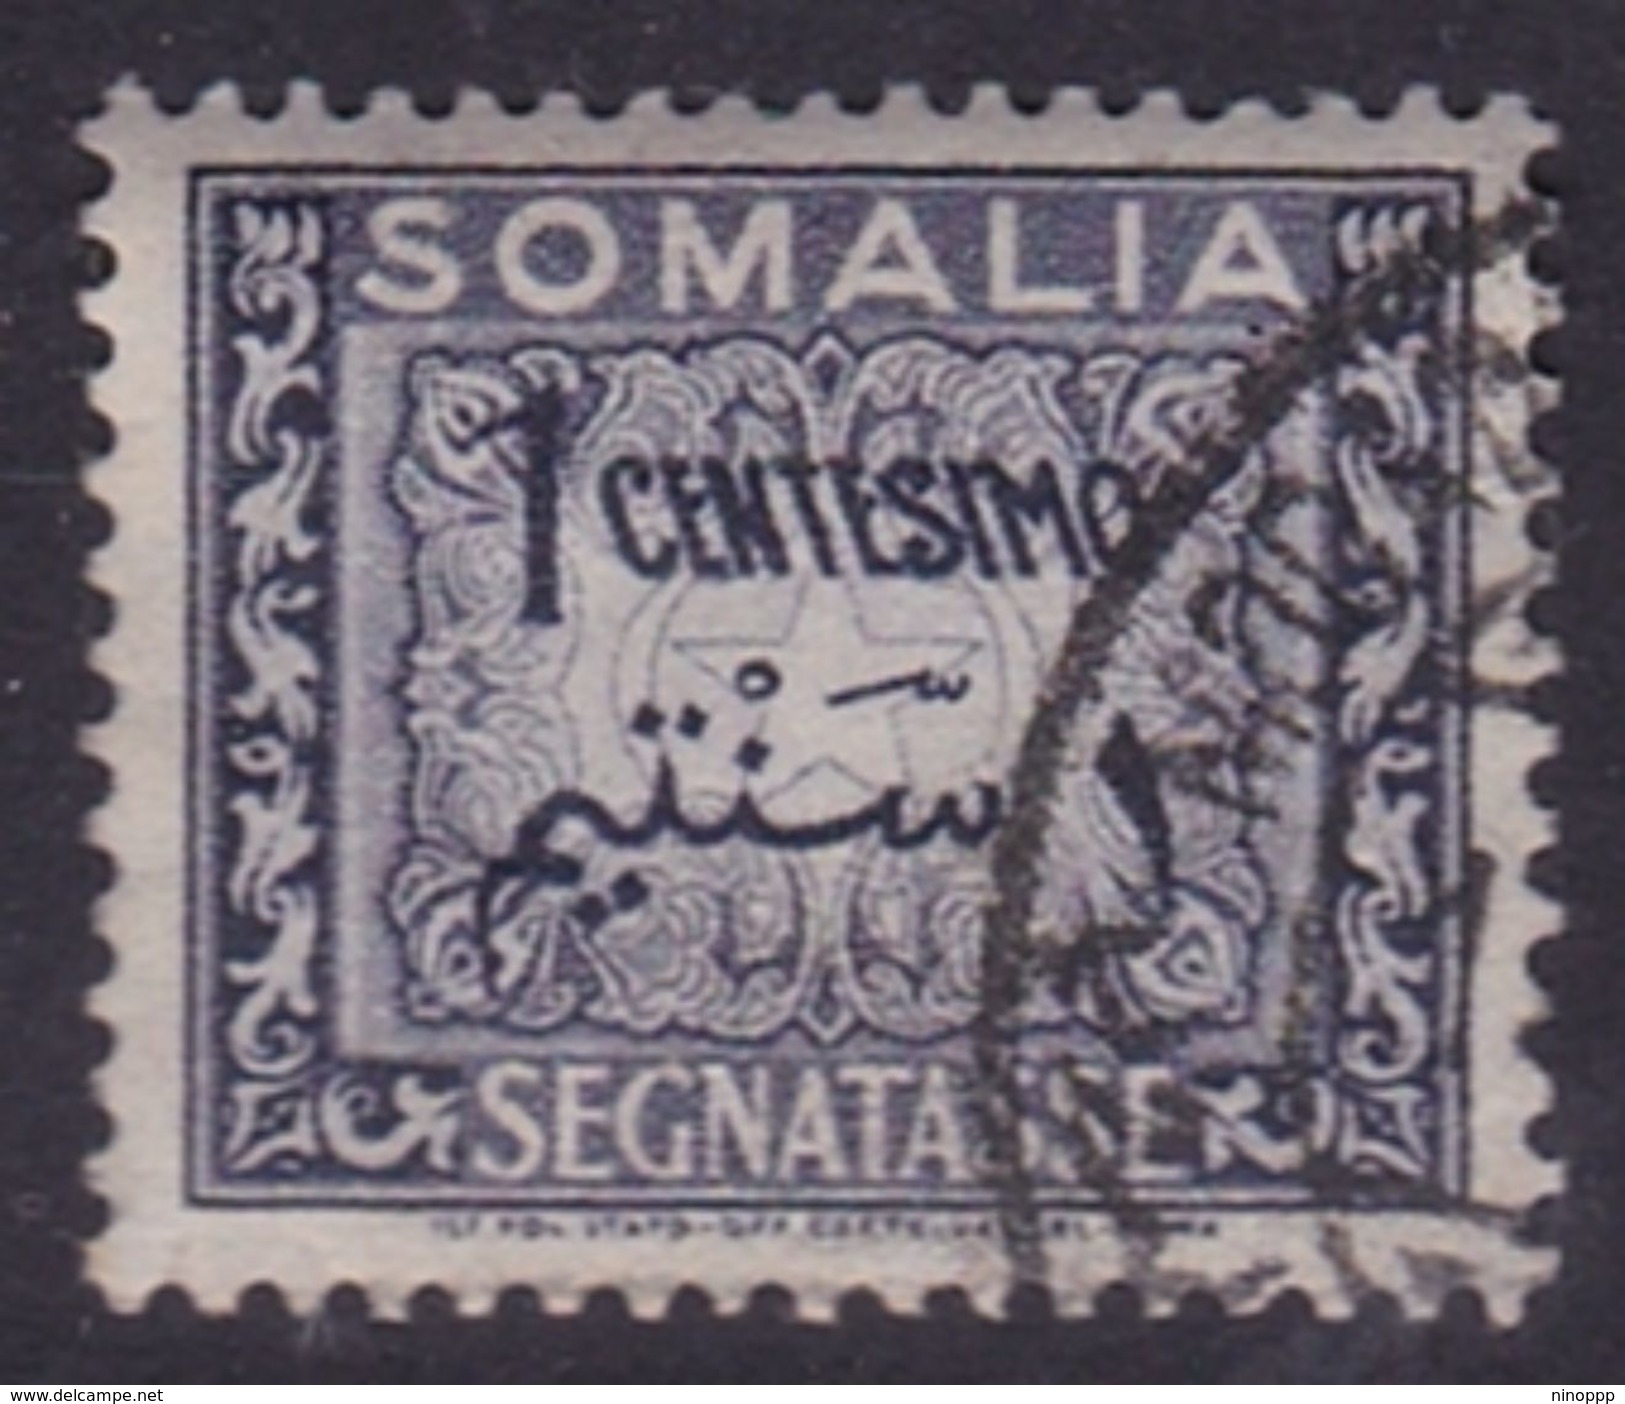 Somalia Scott J55 1950 Postage Due 1c Dark Gray, Used - Somalie (AFIS)